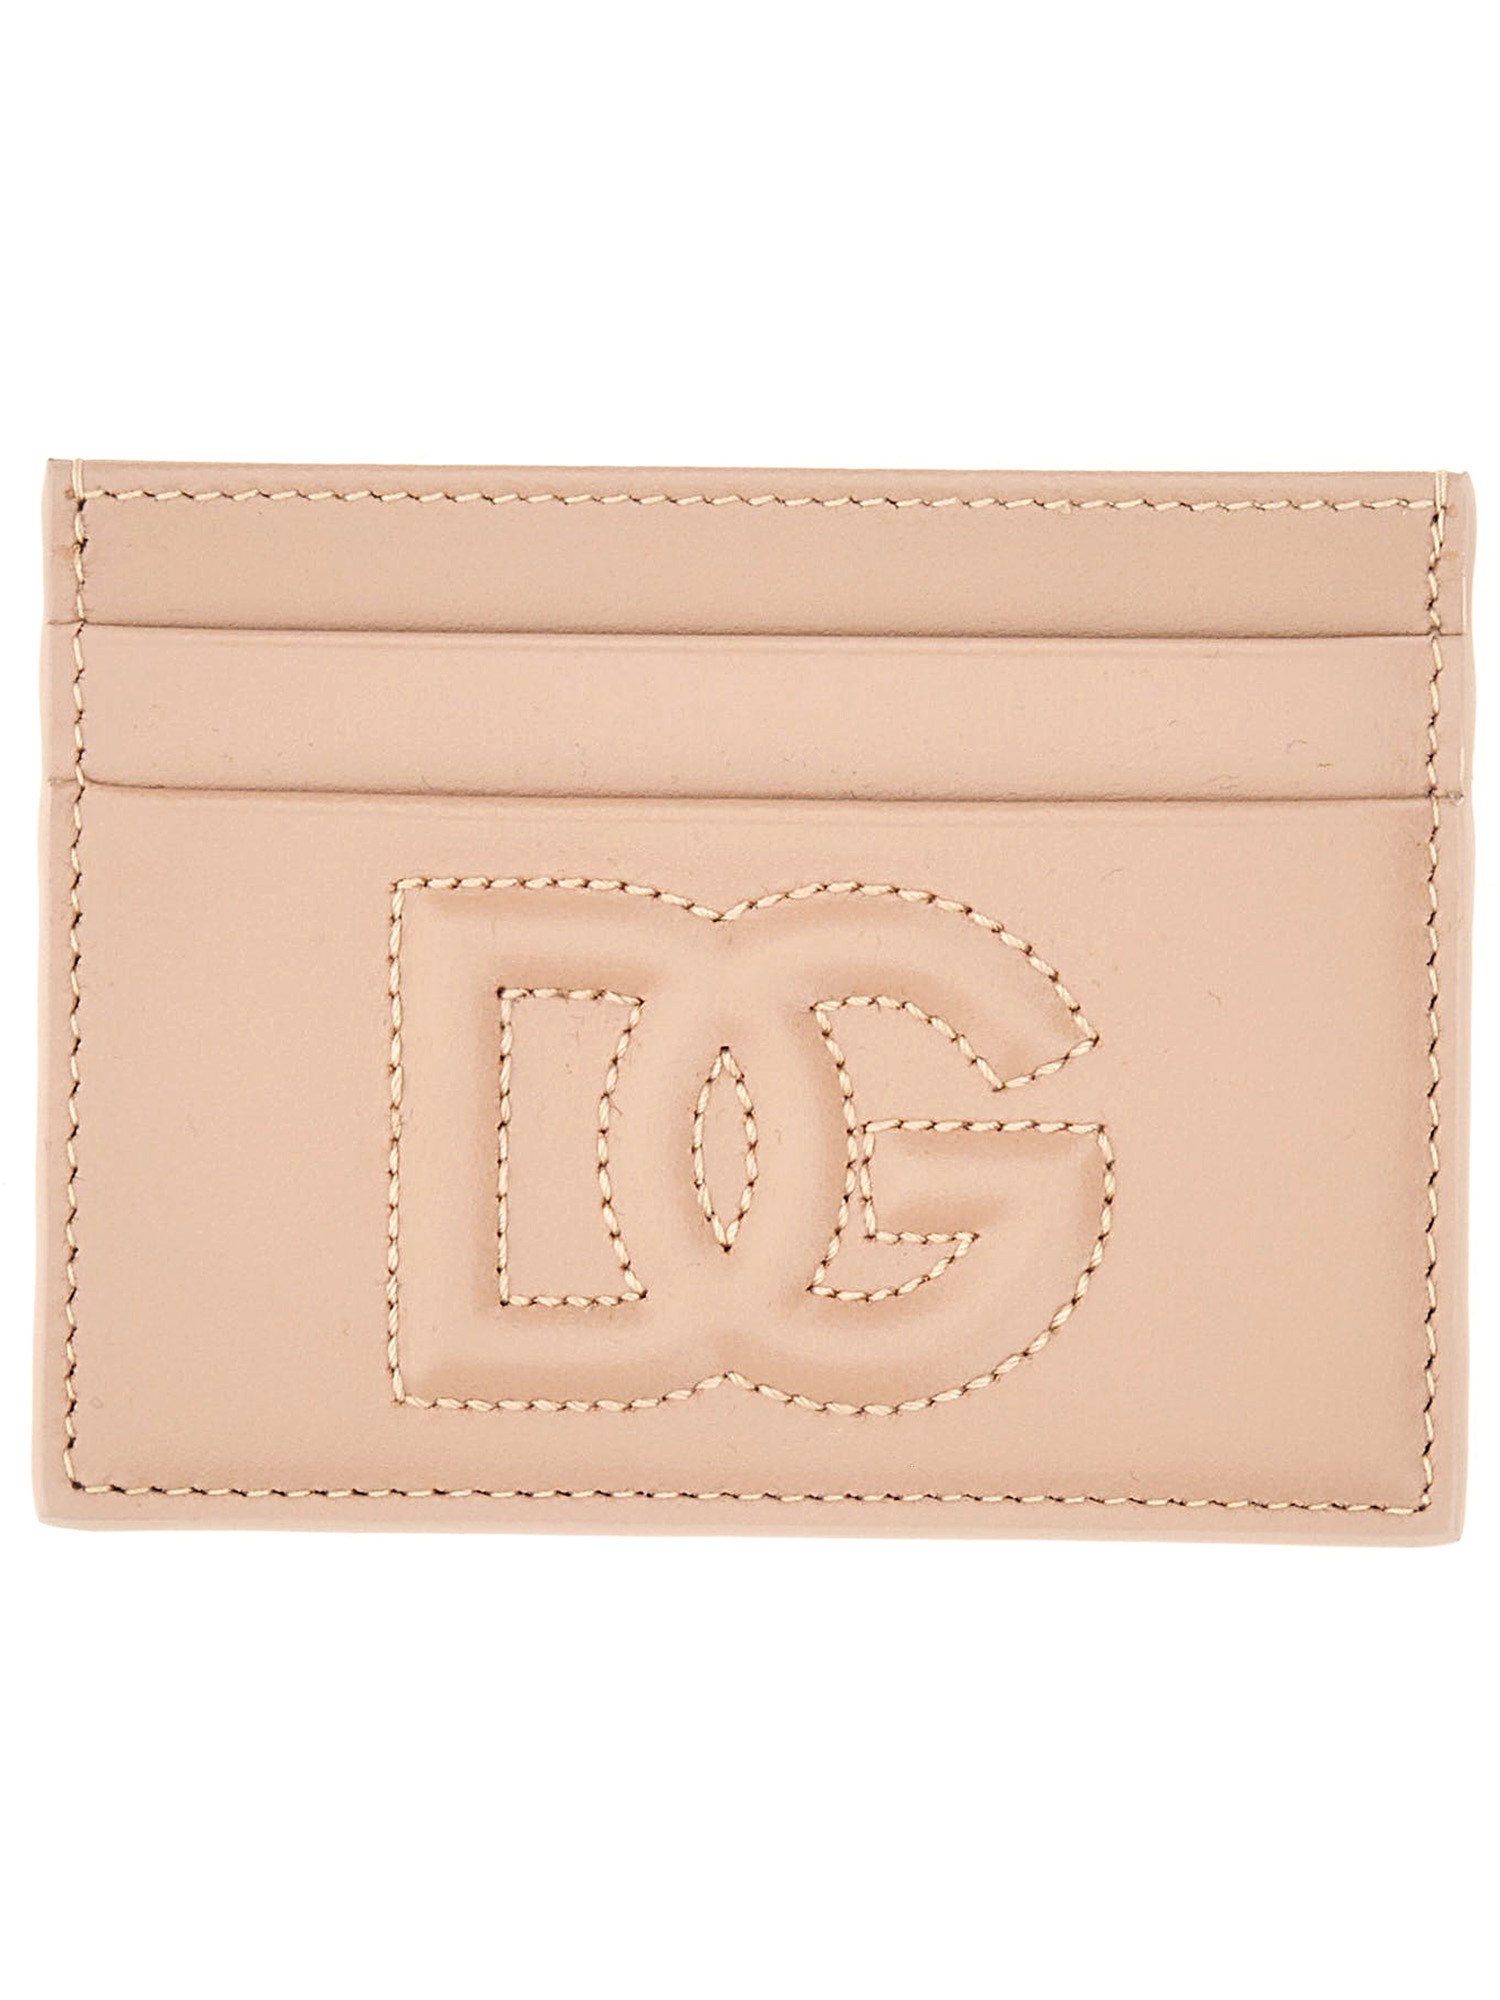 Dolce & Gabbana Leather Card Holder In Powder